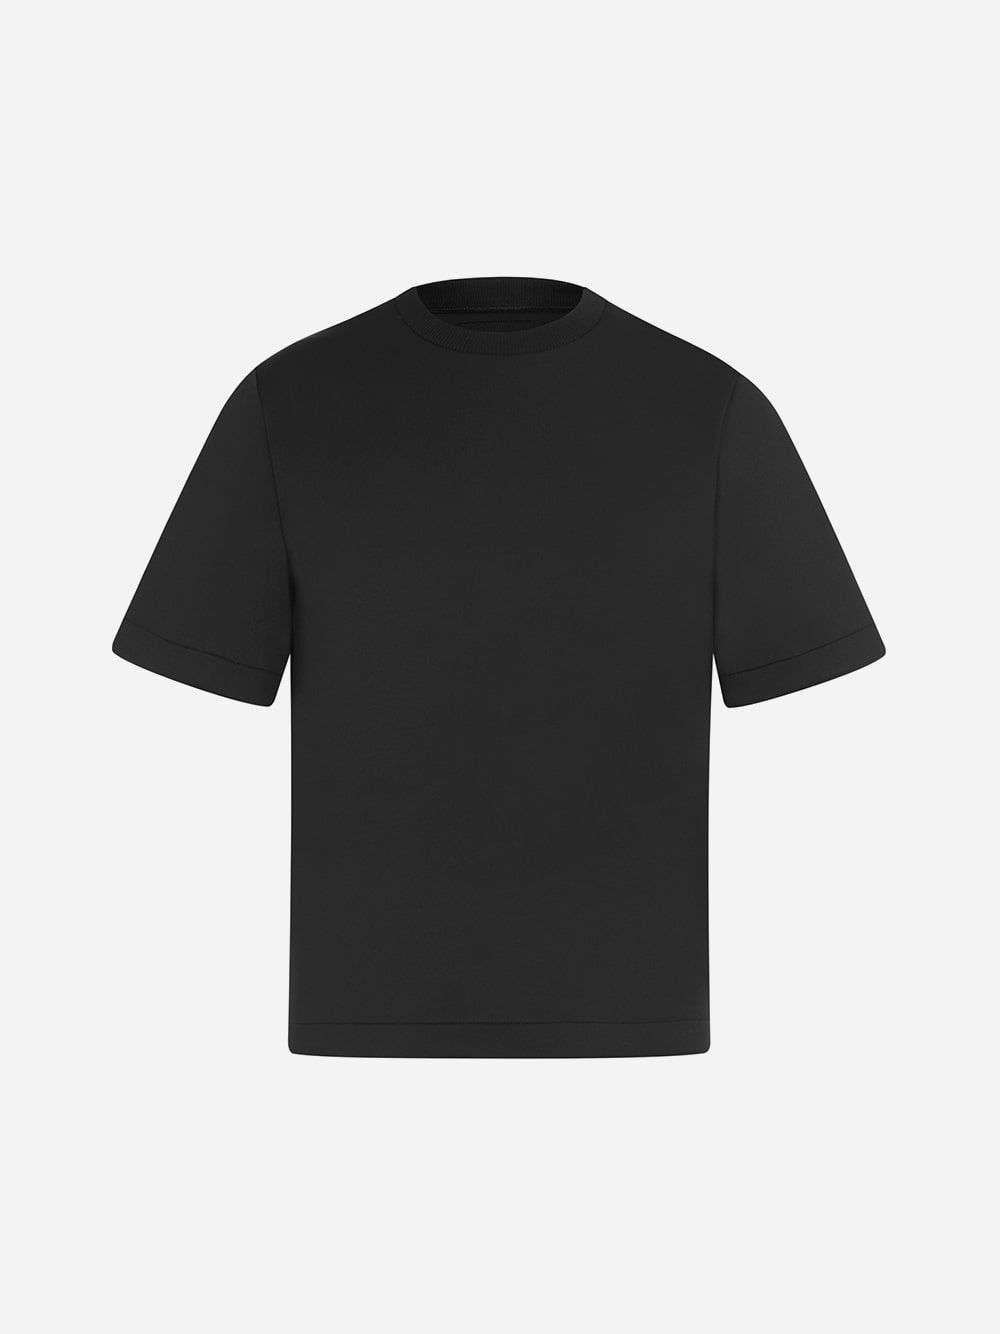 Black Neoprene T-shirt | Diogo Miranda 